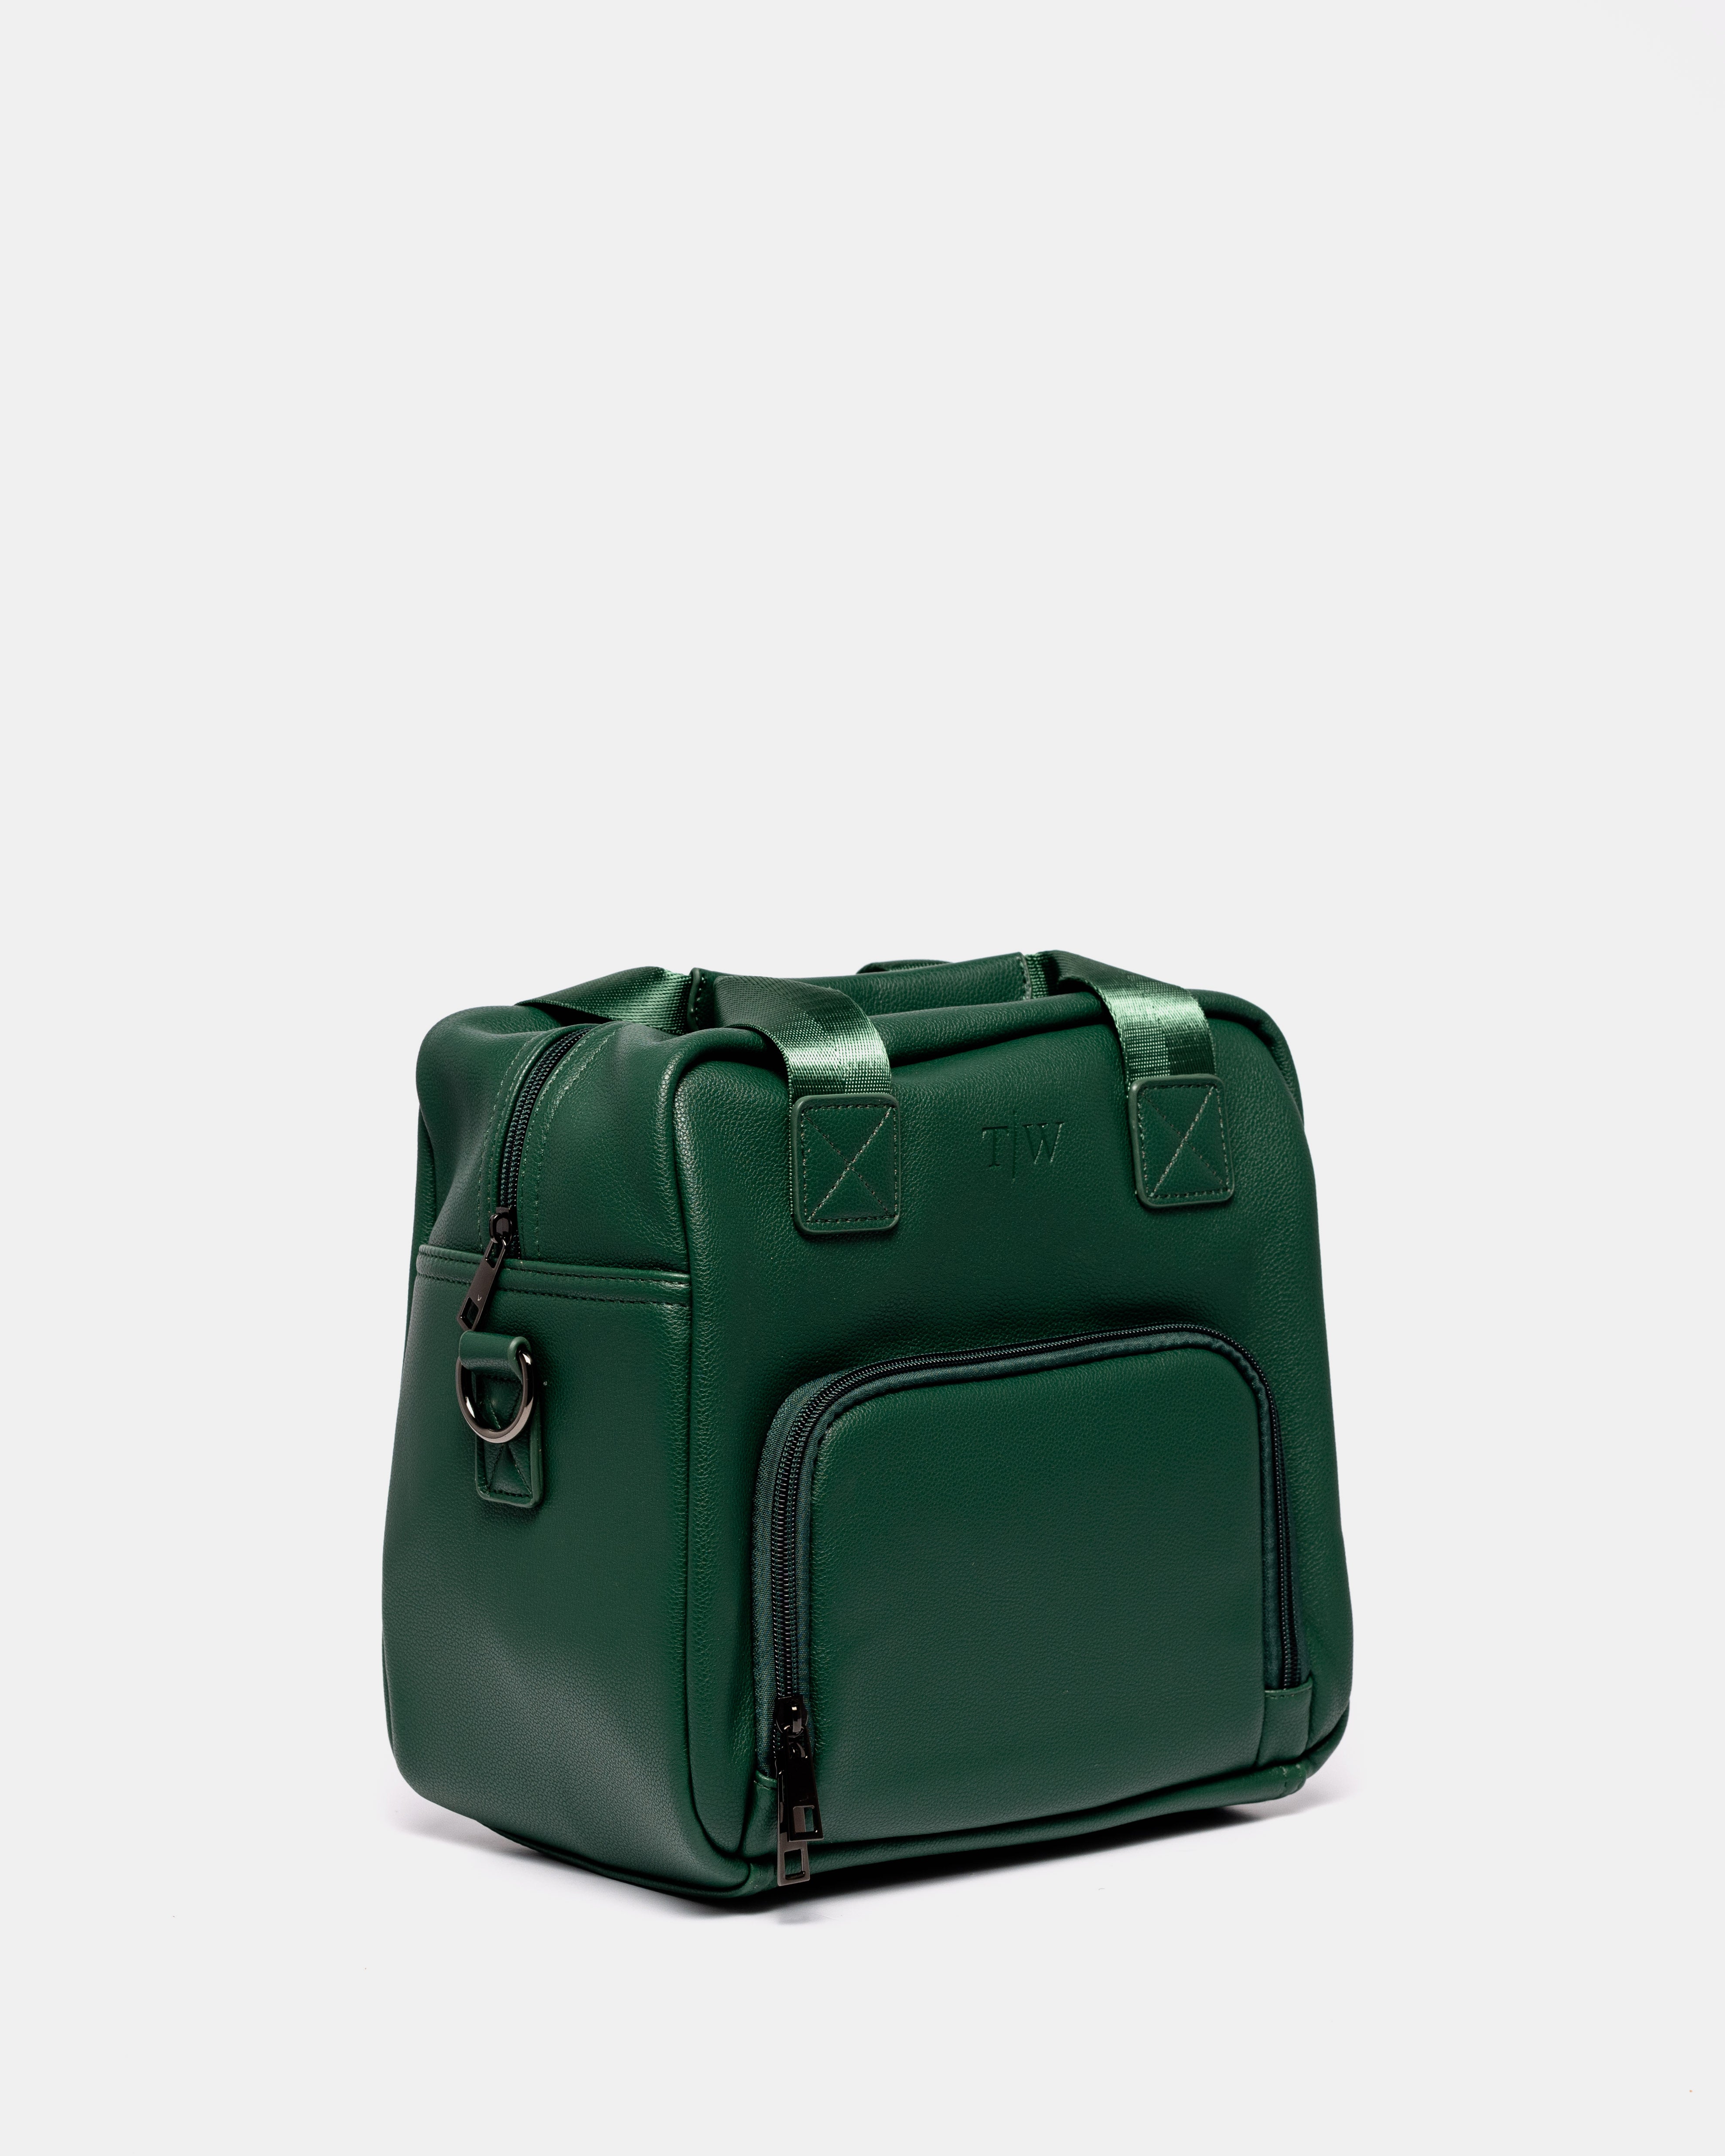 Callaloo Green Luxury Lunch Bag - T|W Tote